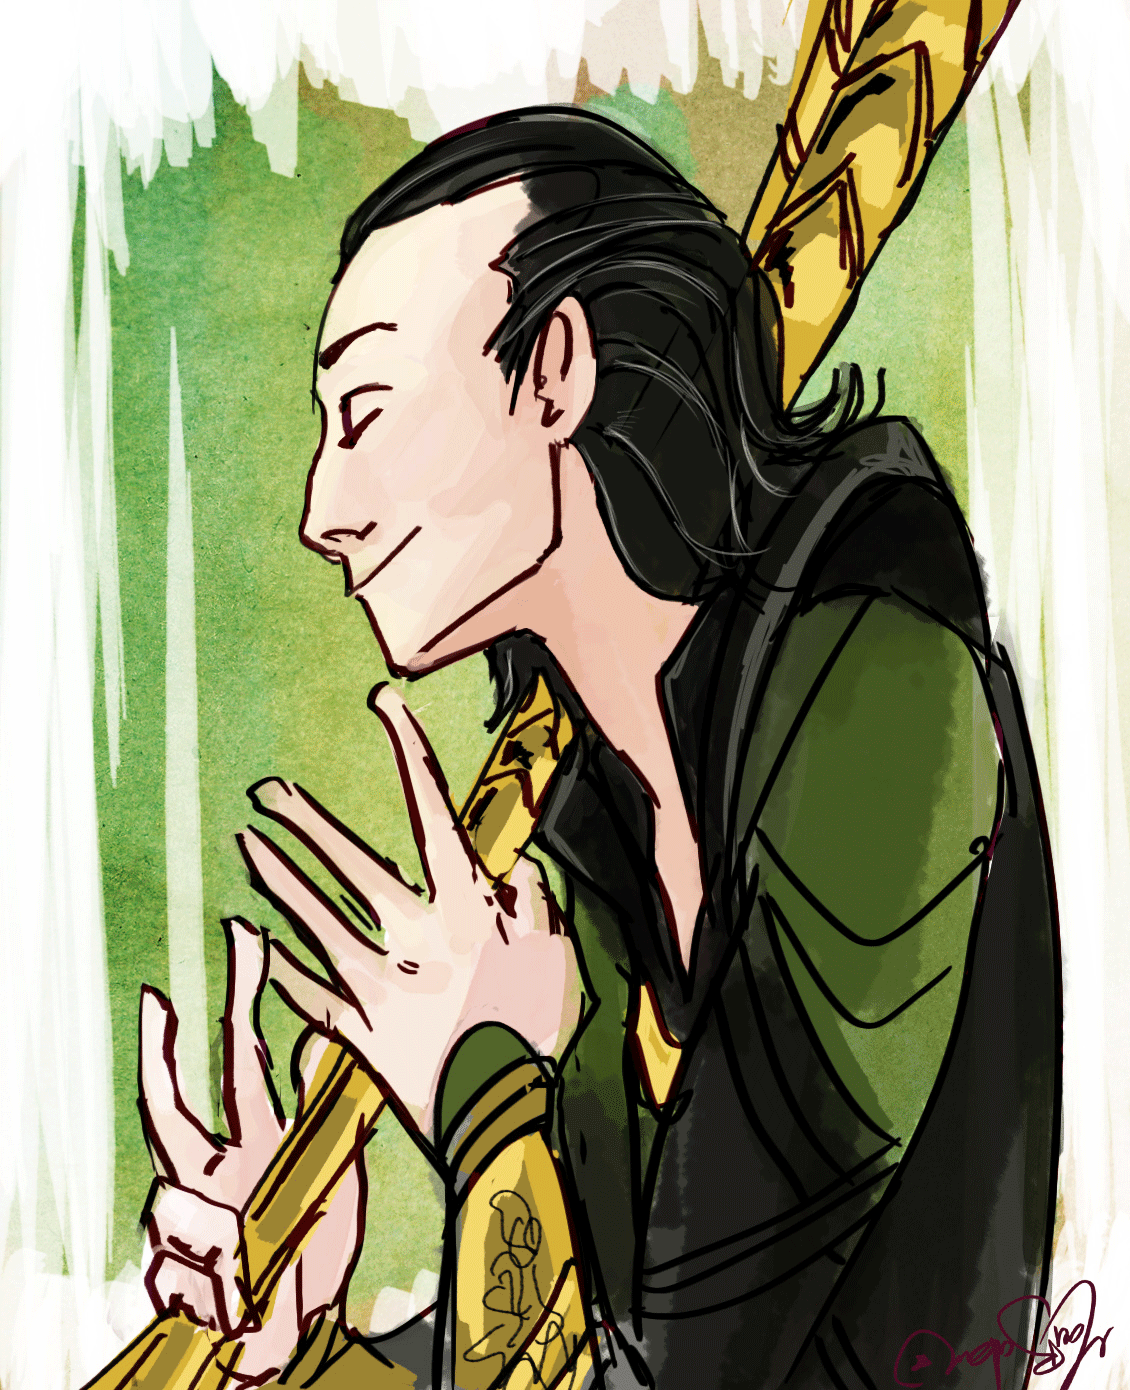 Lucky to see me huh Loki